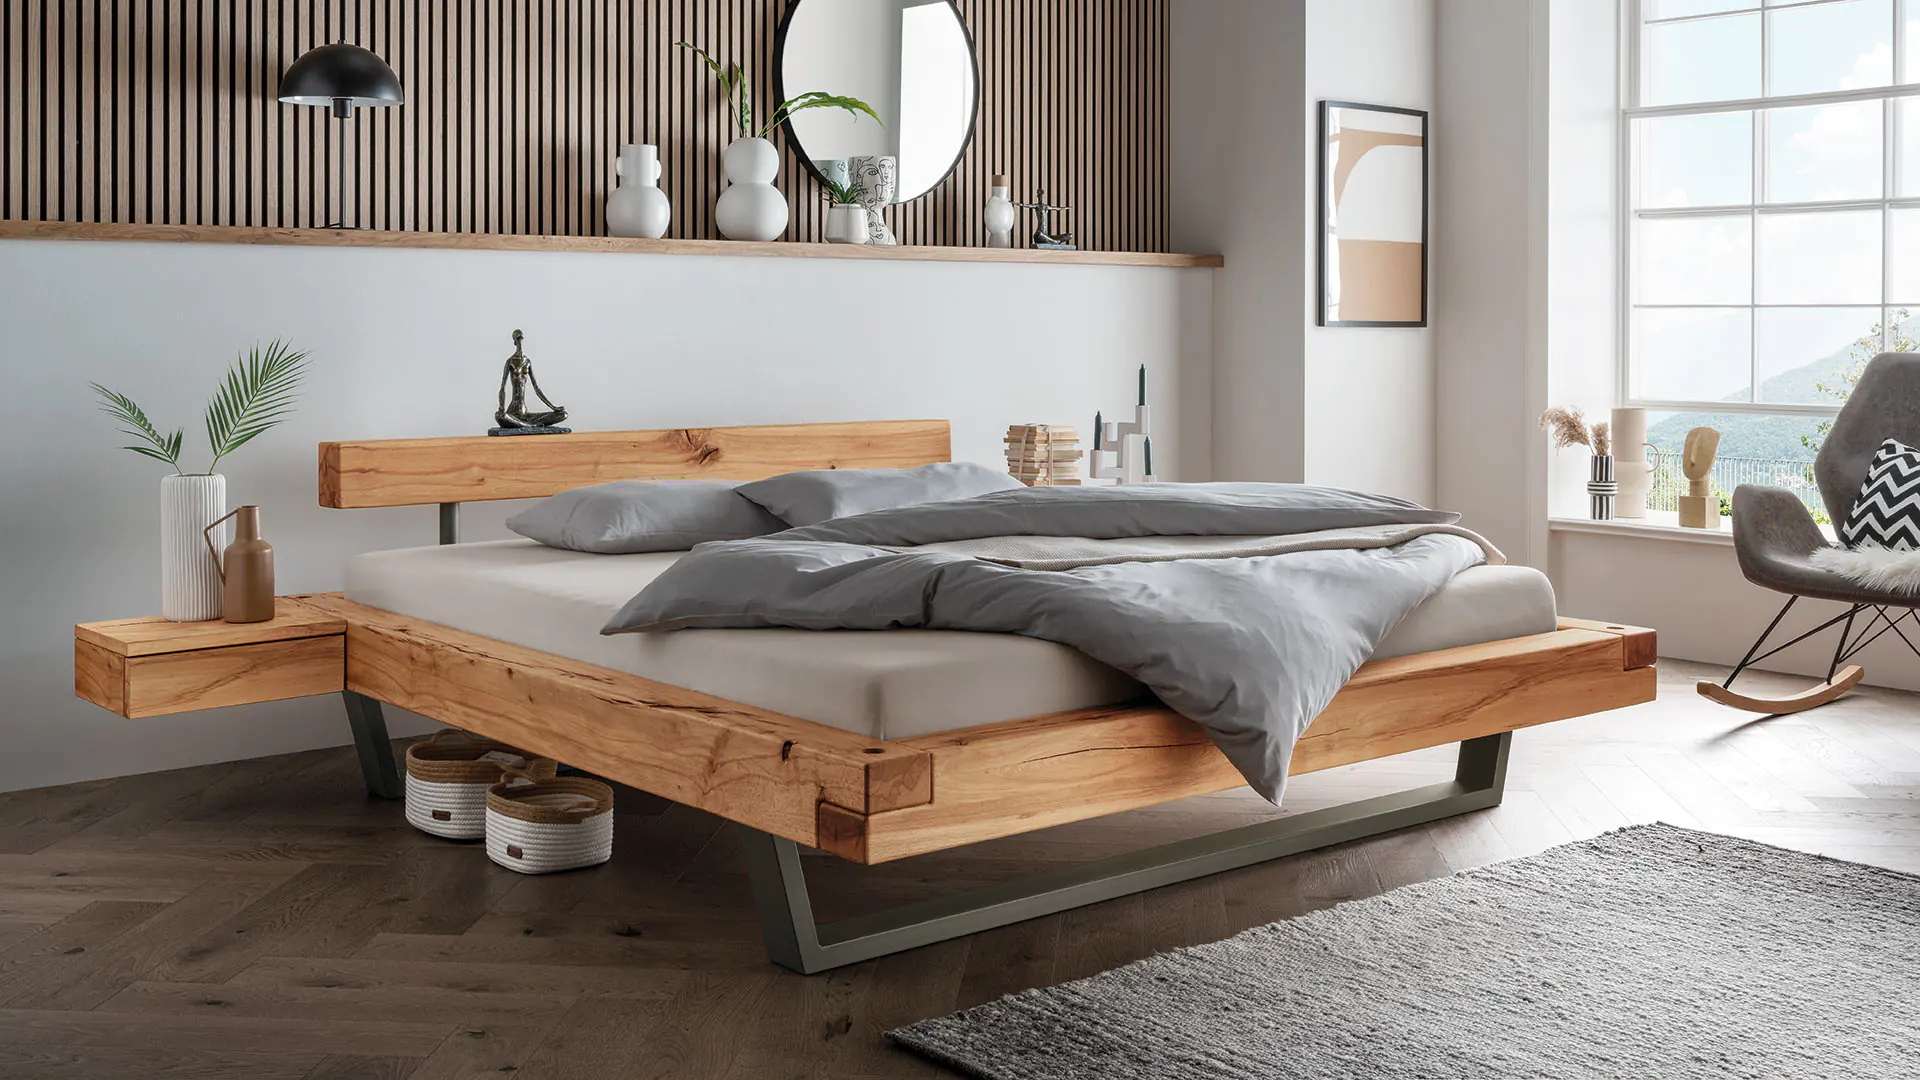 marketing berouw hebben plek Hangende balk bed "Madea" | allnatura Nederland